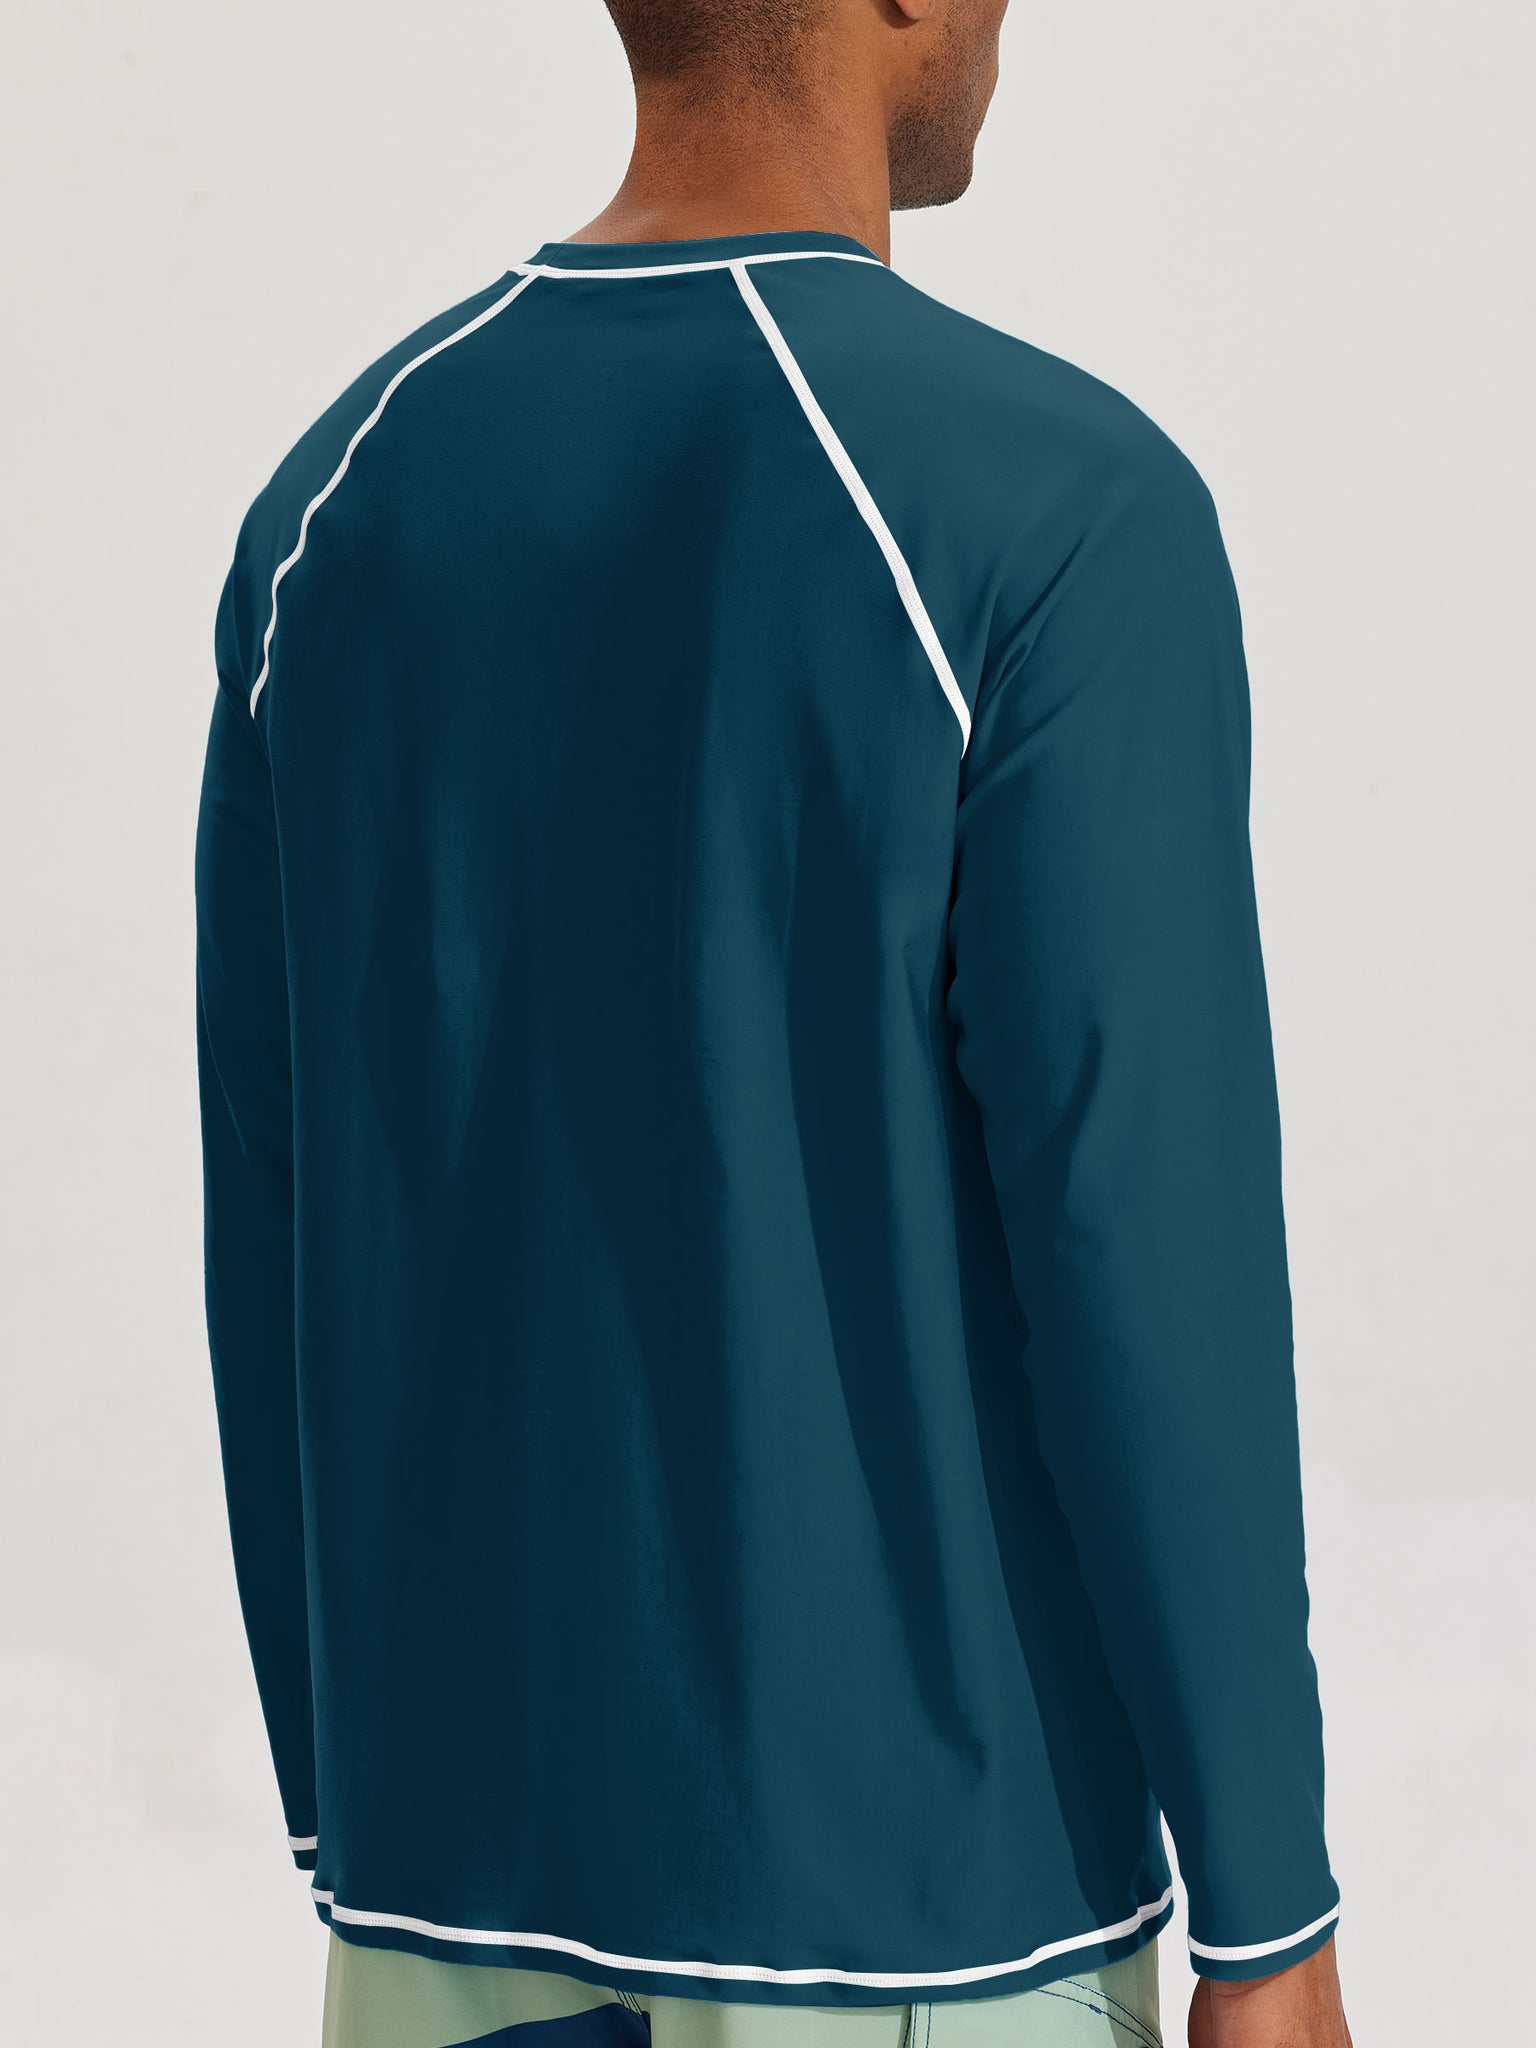 Men's Sun Protection Long Sleeve Shirt_Navy_model3